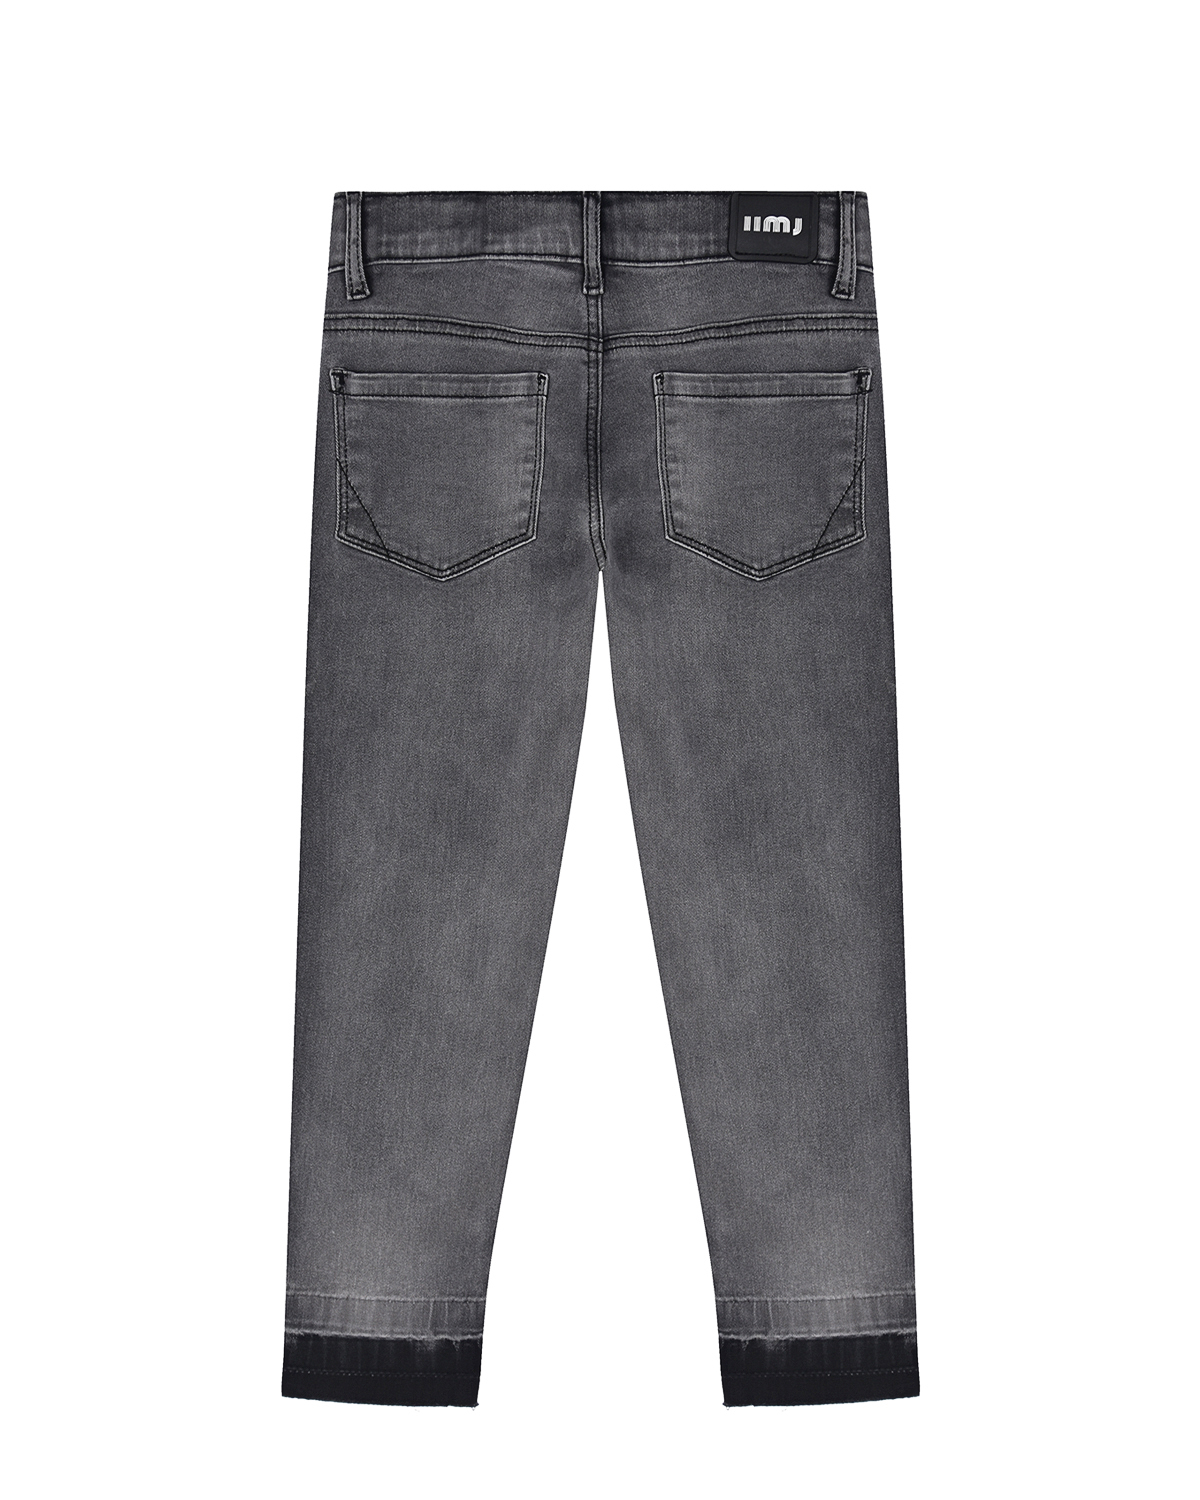 Серые узкие джинсы Its in my jeans, размер 140, цвет серый - фото 2